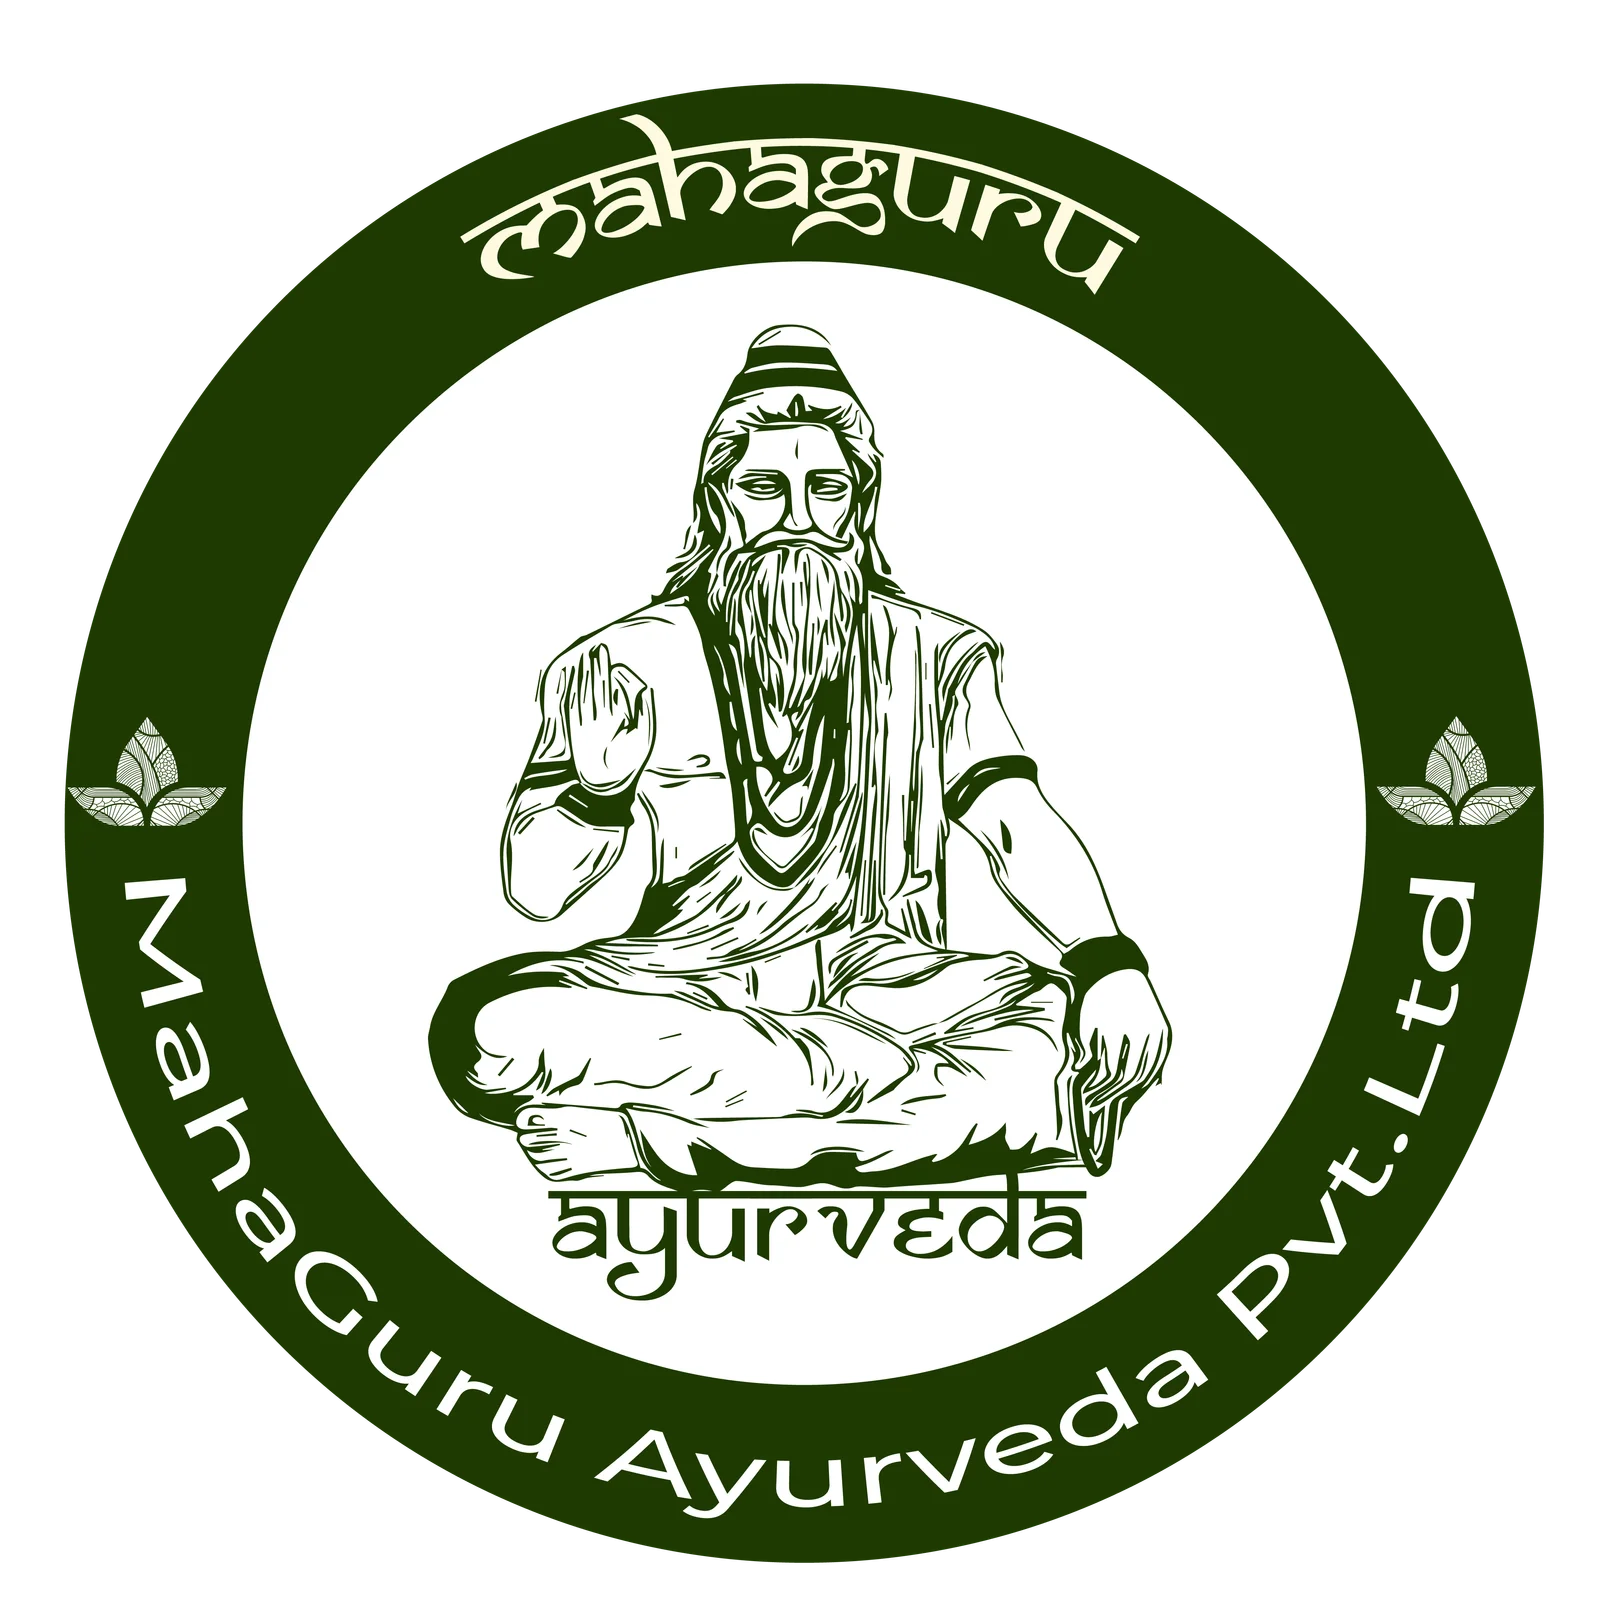 Mahaguru Ayurveda